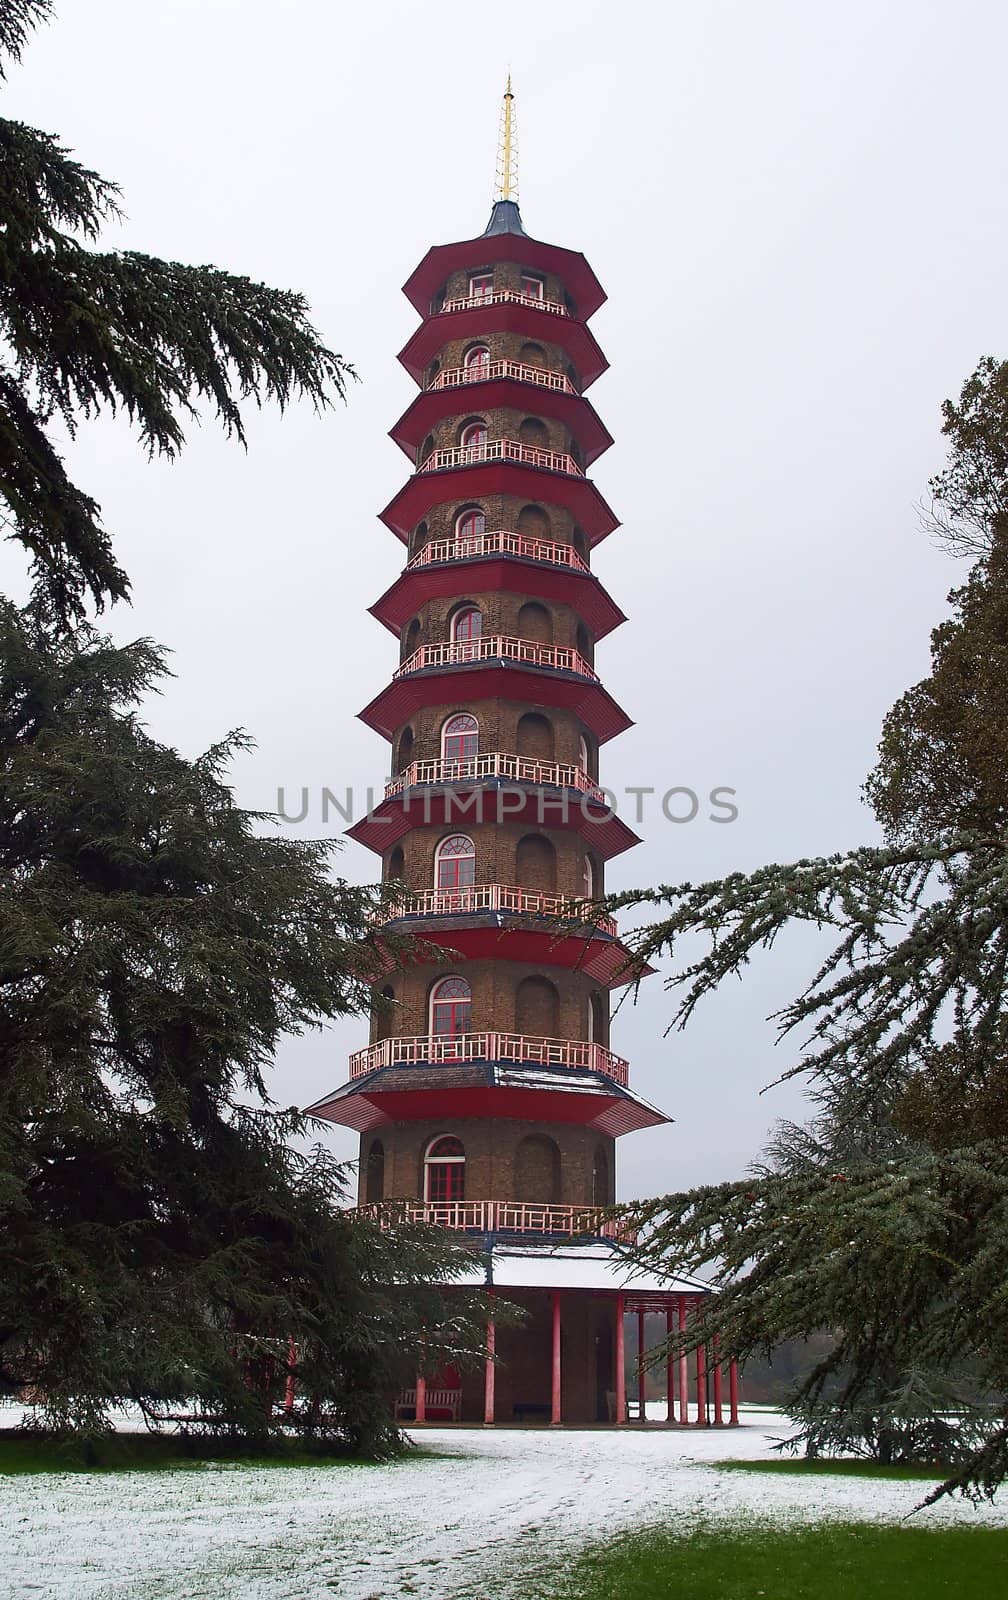 The pagoda in Kew garden by gary718